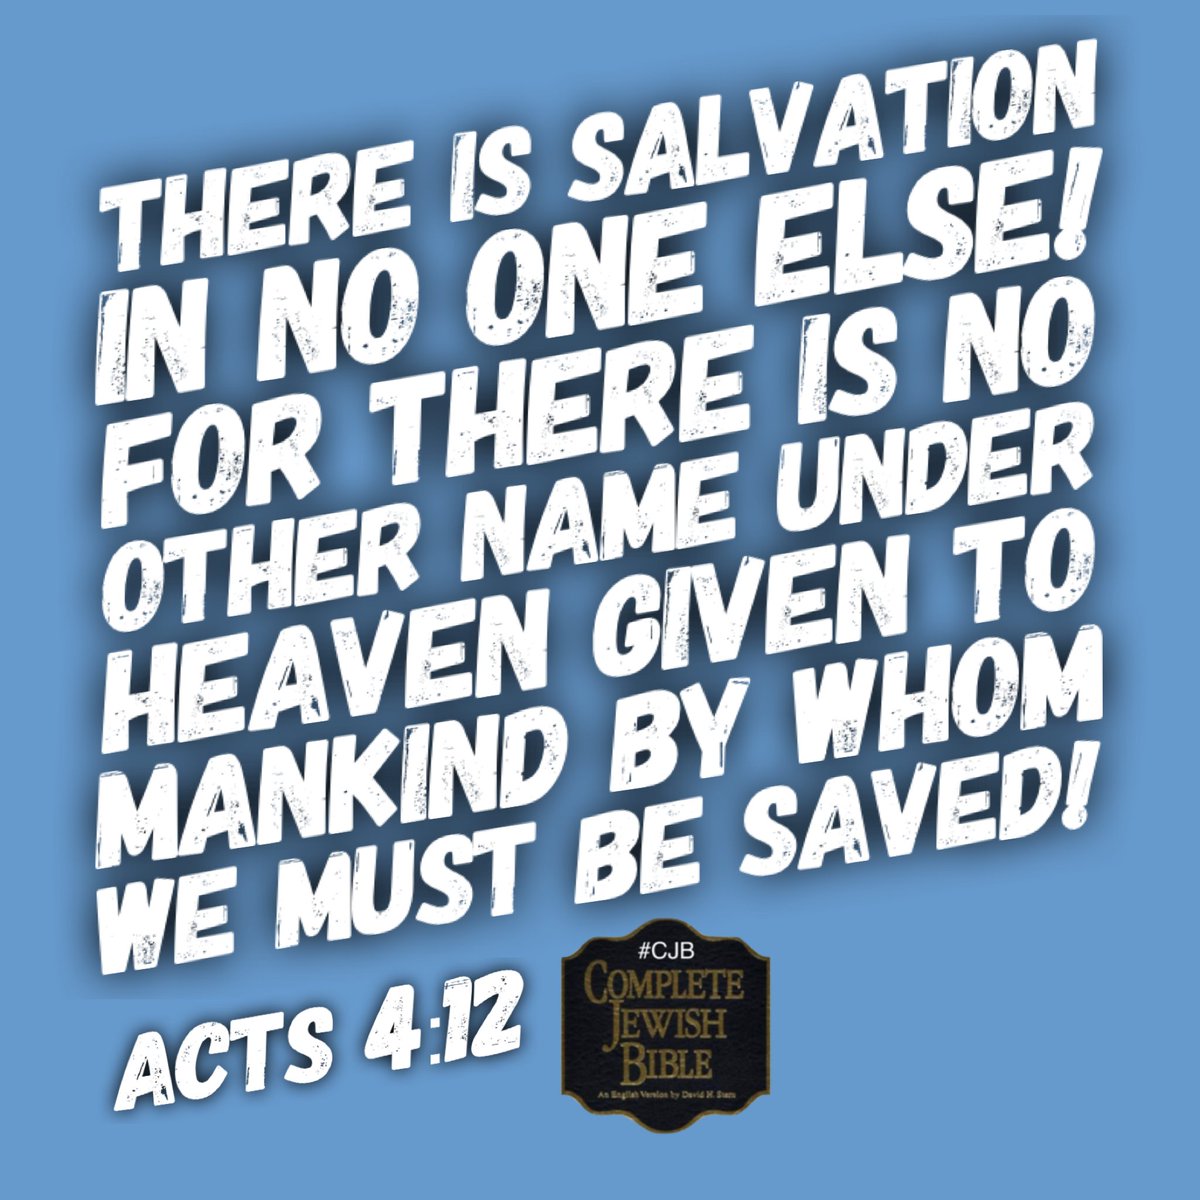 Acts 4:12 #CJB #CompleteJewishBible #VerseOfTheDay